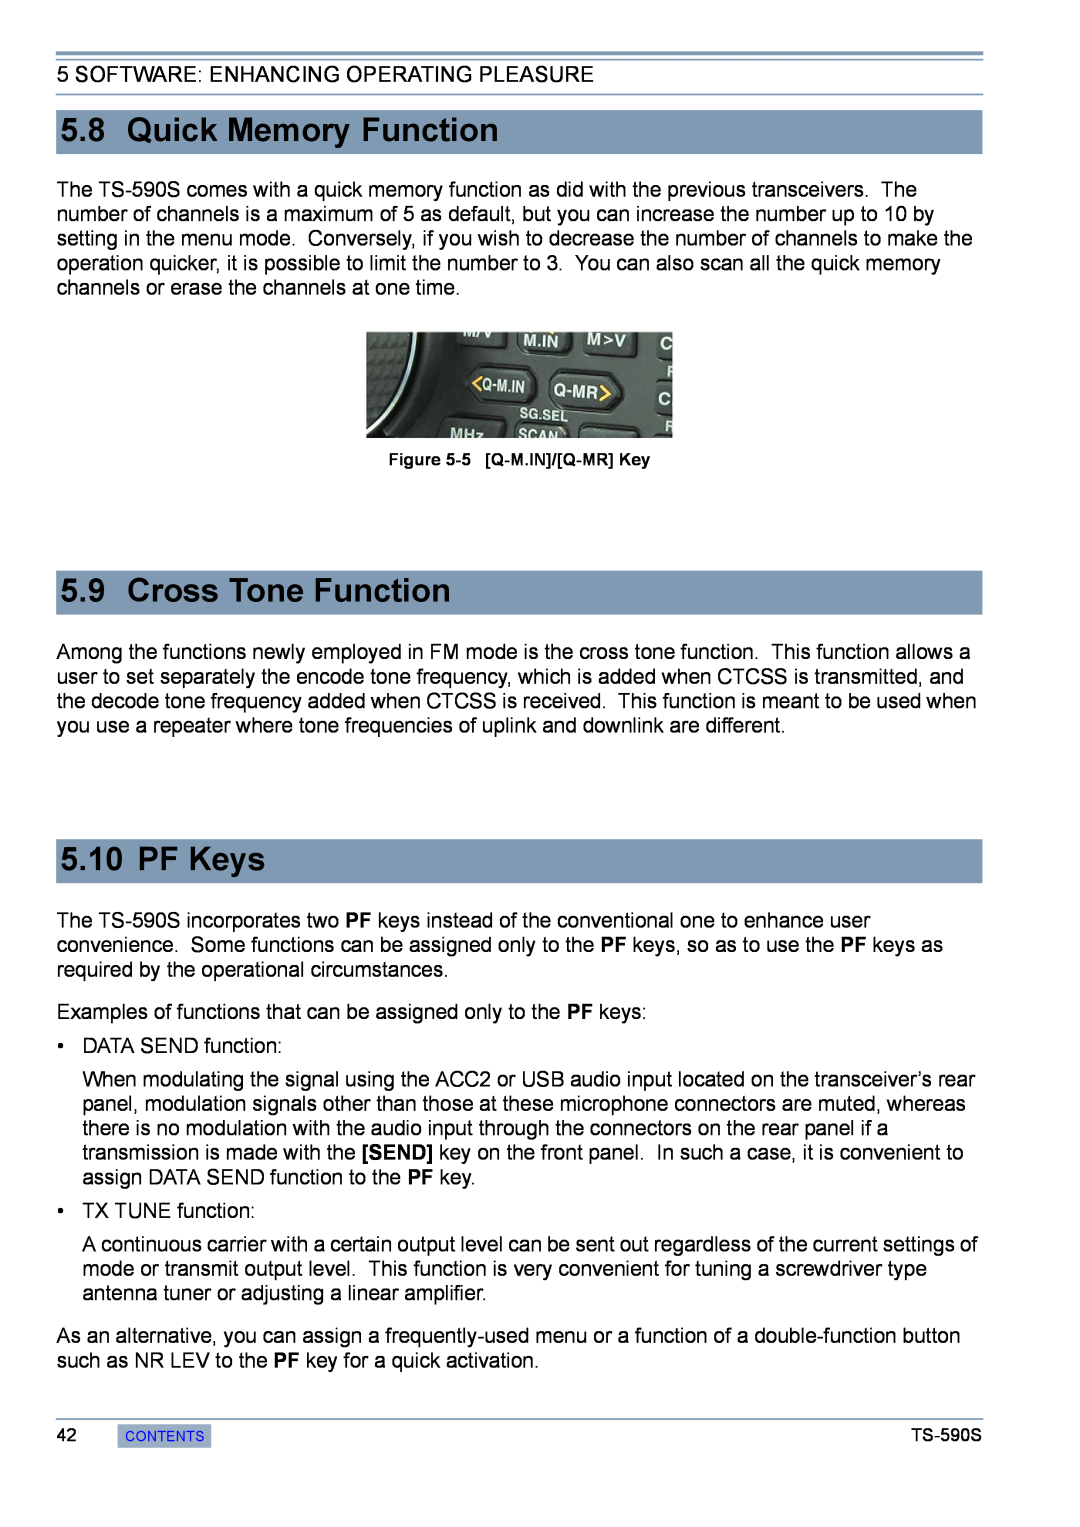 Kenwood TS-590S manual Quick Memory Function, Cross Tone Function, PF Keys, Software: Enhancing Operating Pleasure 